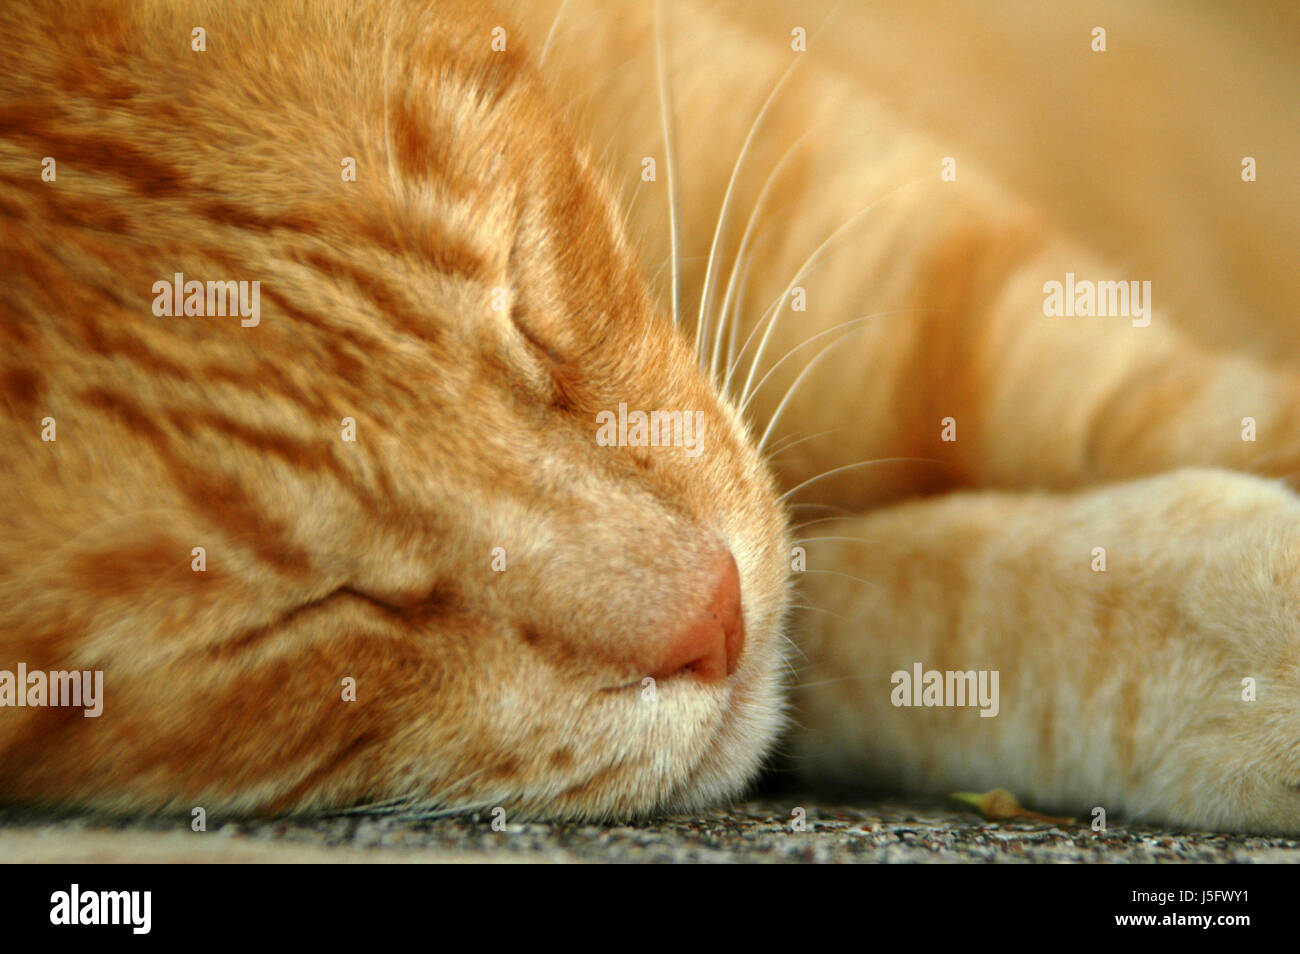 animal pet mammal eyes soft cats lie lying lies radio silence quietness silence Stock Photo